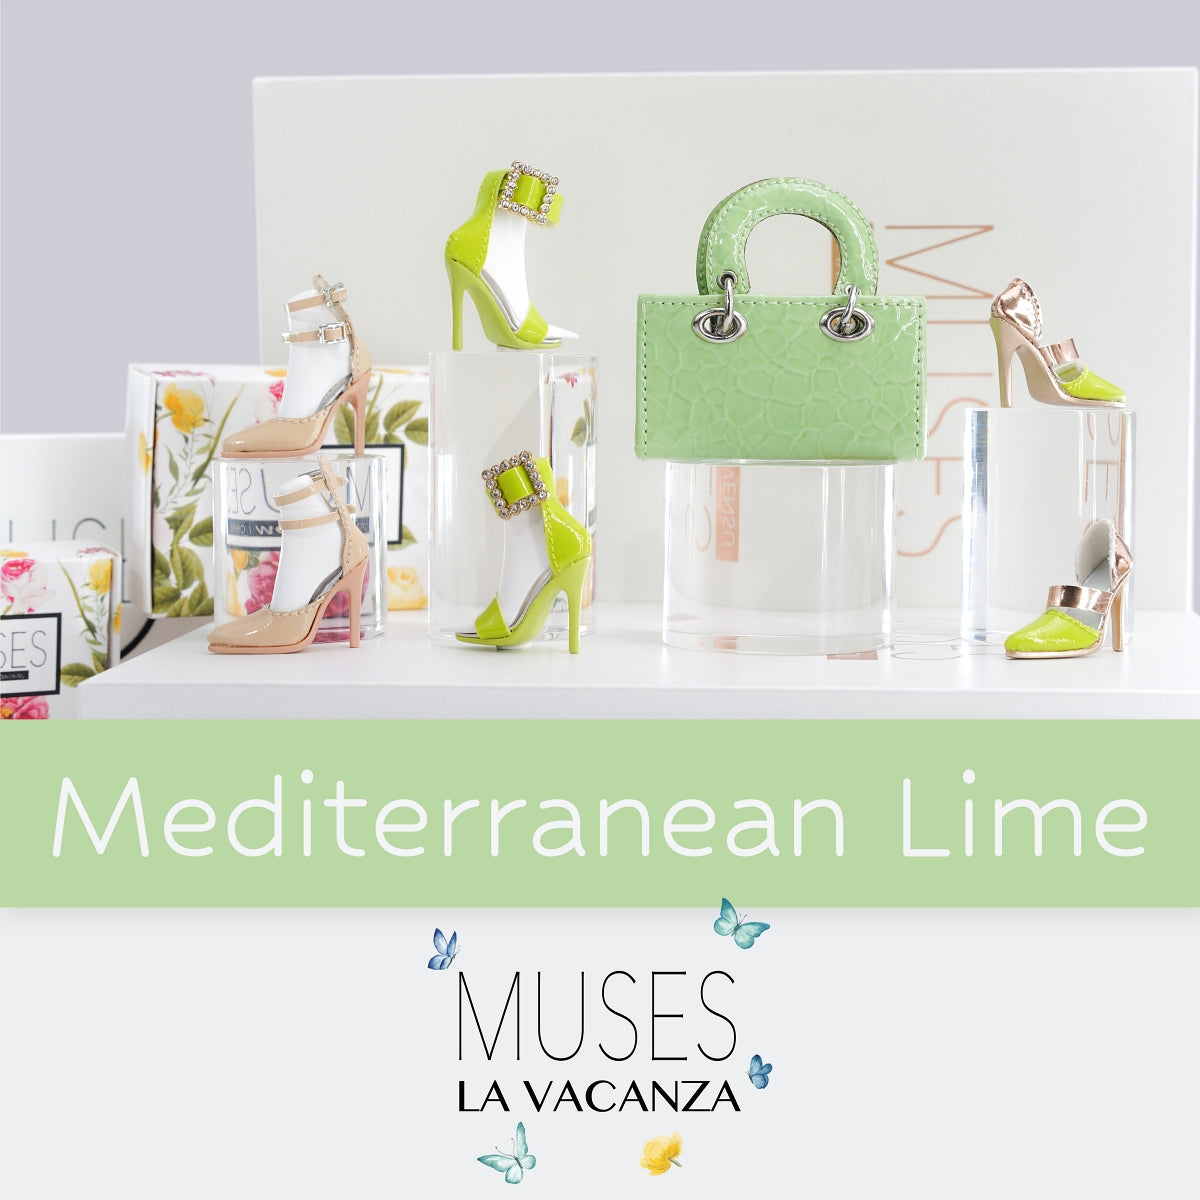 Muses La Vacanza Le Mediterranean Lime , Acc. Set., Pre-Oder for Winter 2023 Delivery.